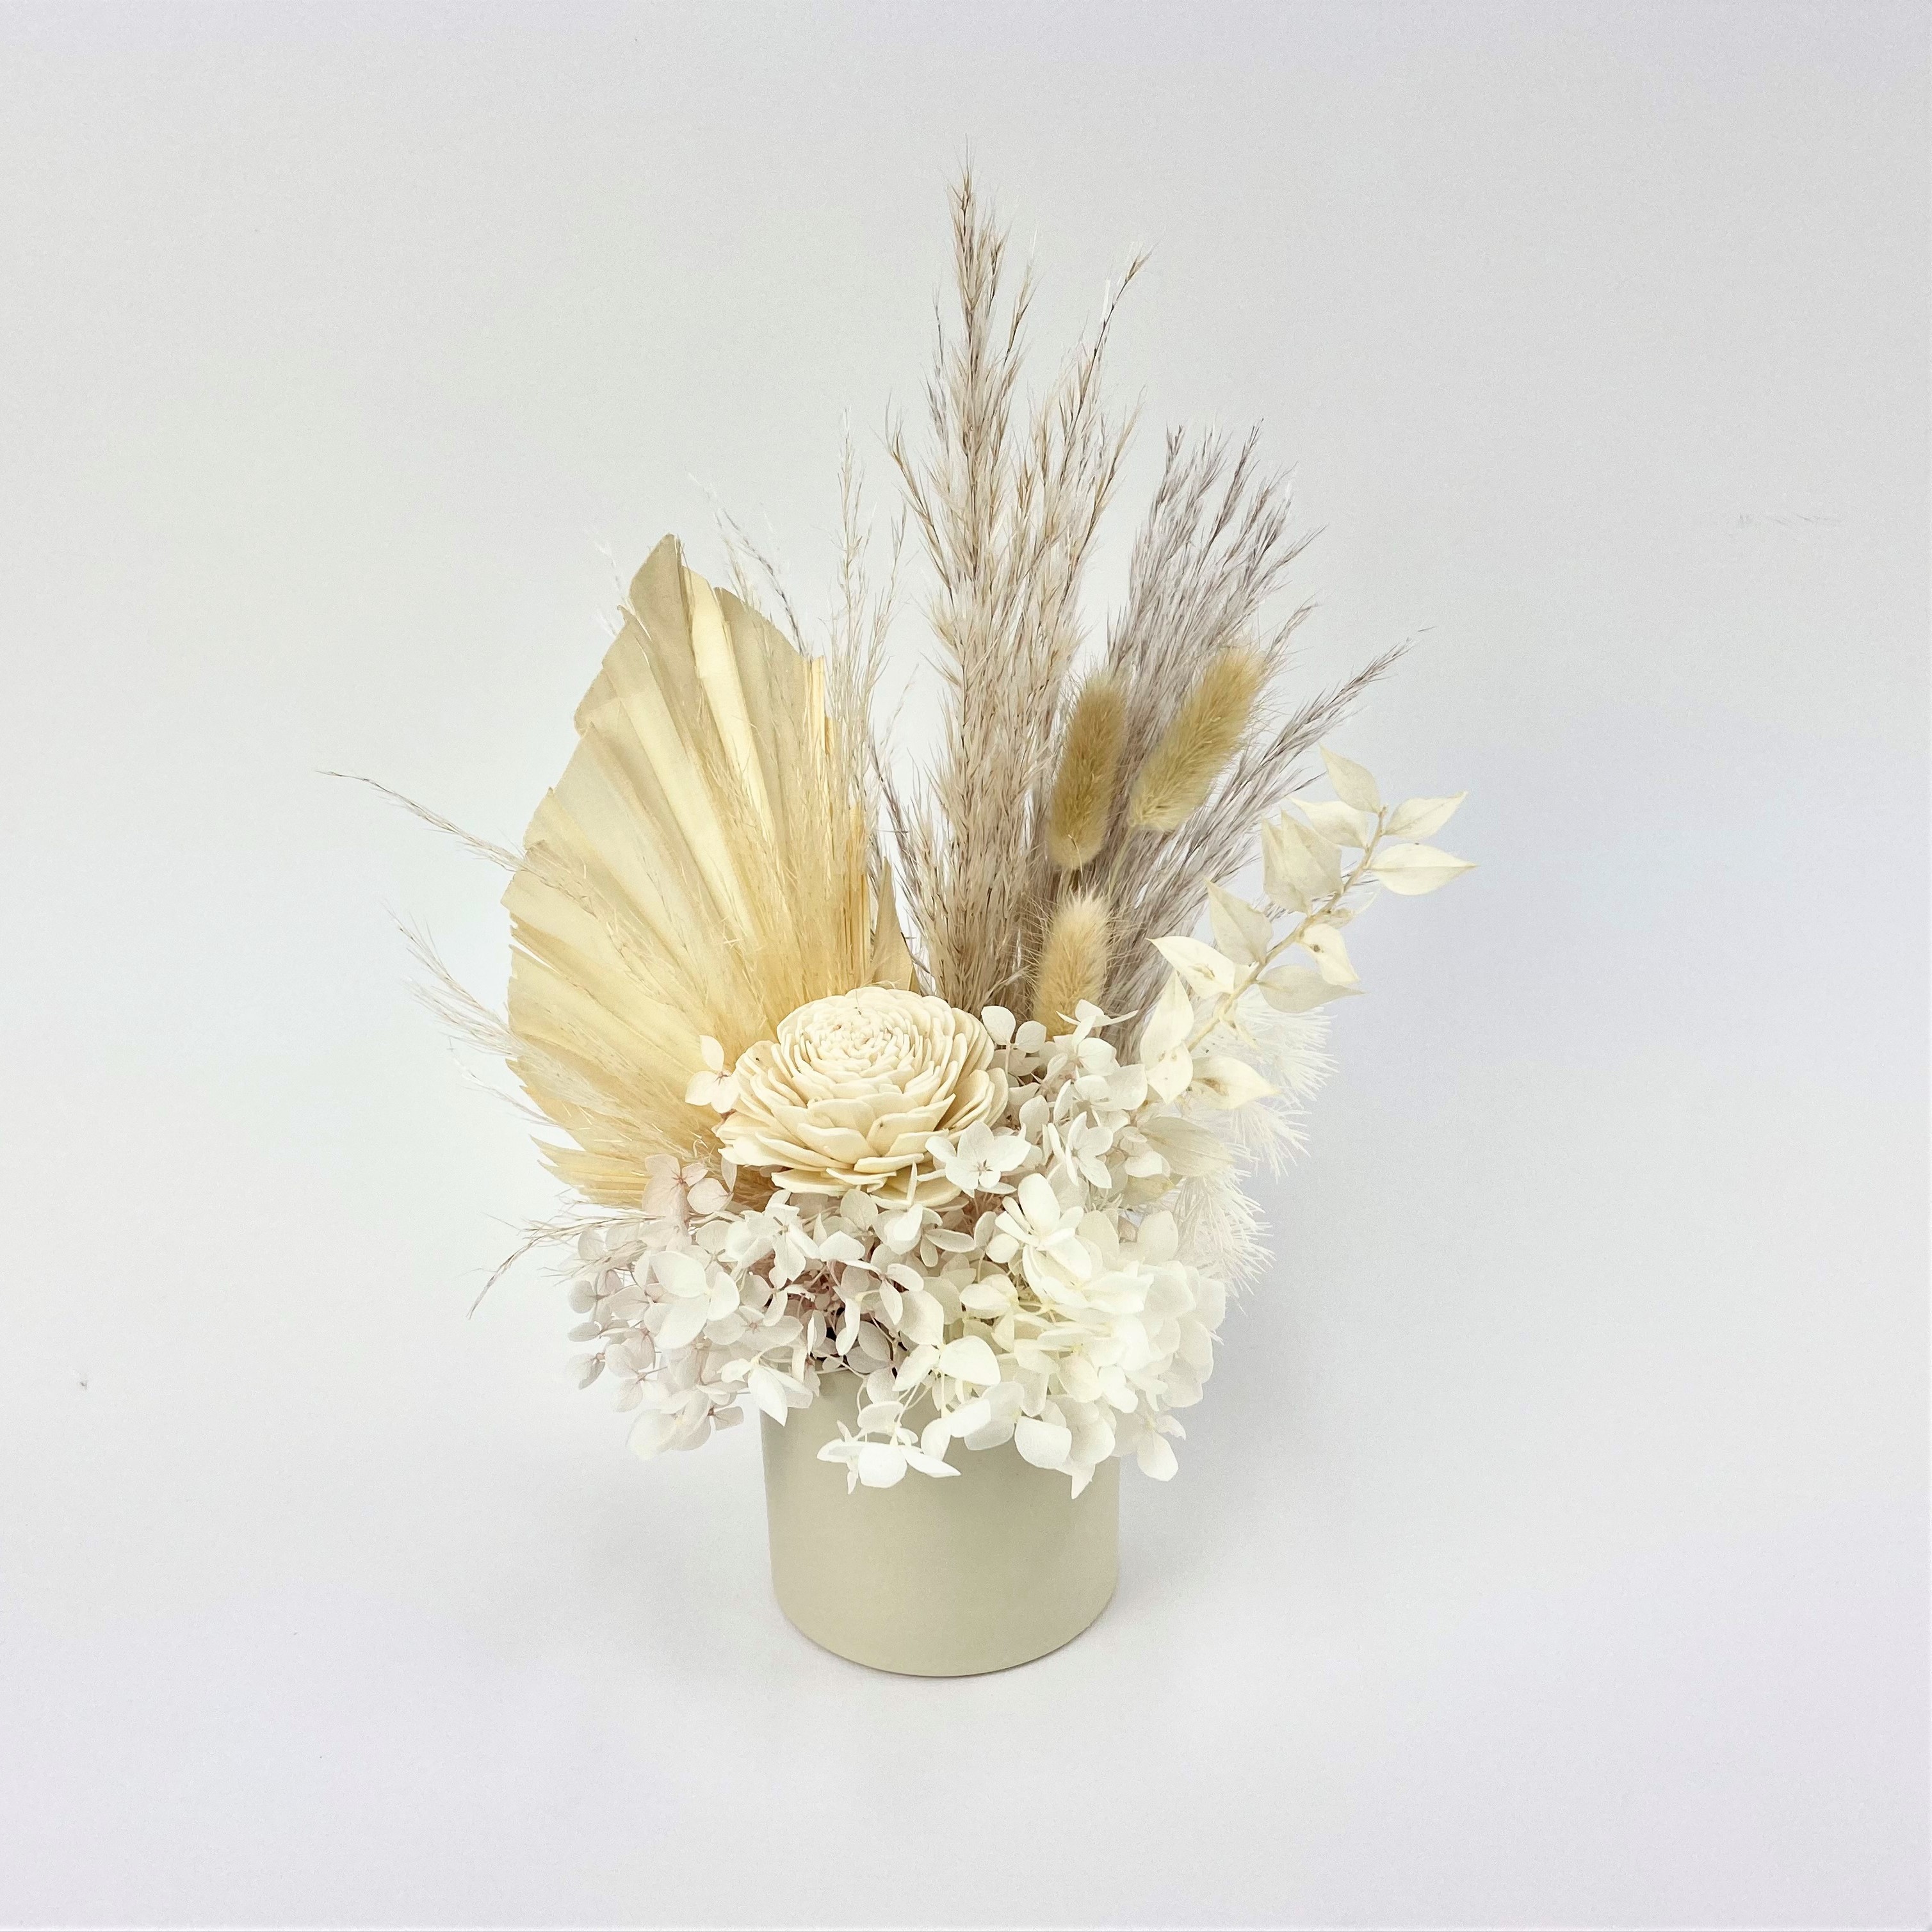 Petite Dried & Preserved Neutral Flower arrangement in ceramic